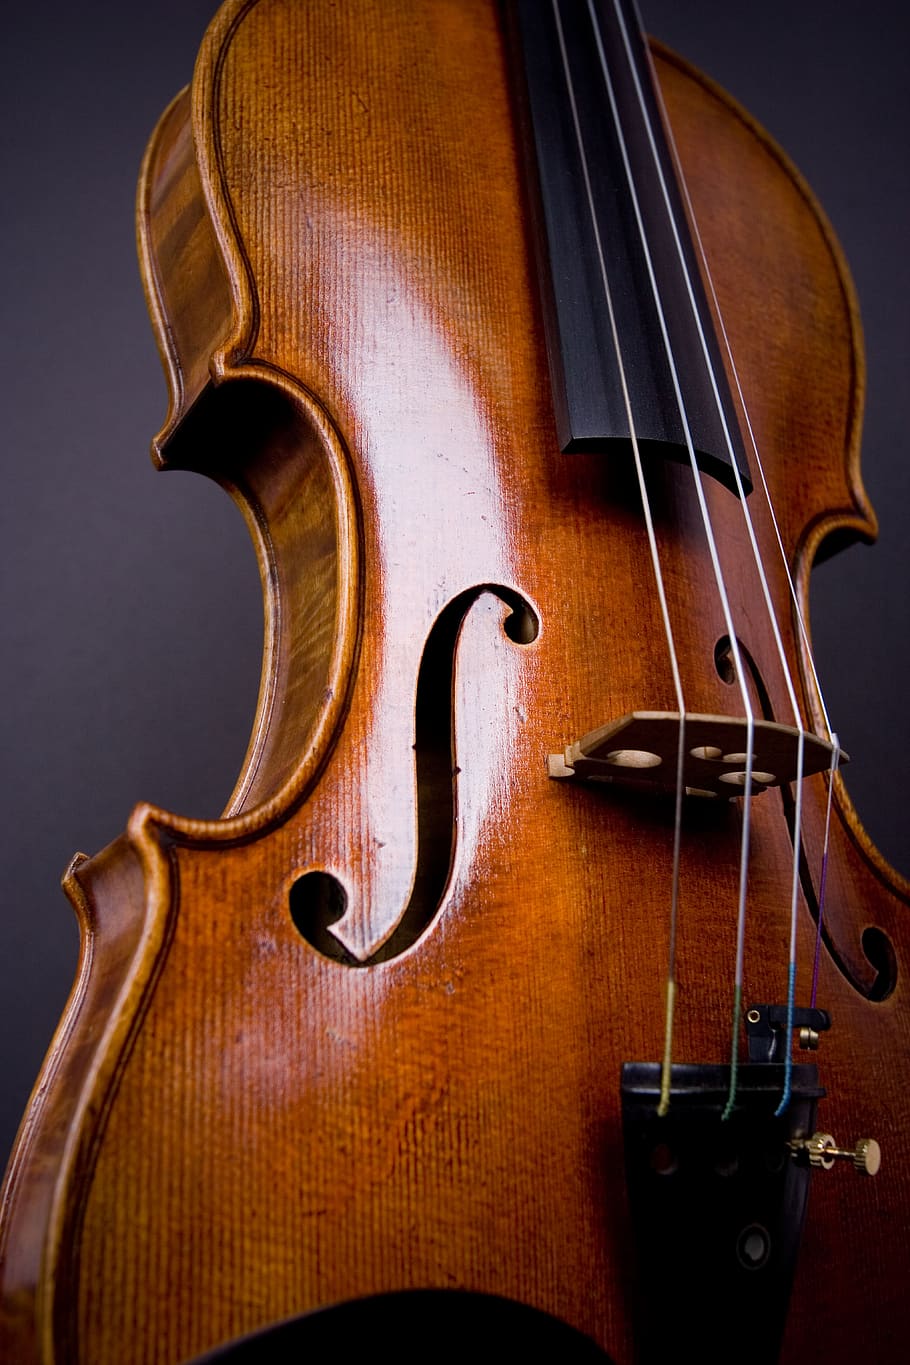 biola, orkestra, cello, klasik, instrumen, instrumen string, musik, peralatan musik, alat musik, budaya seni dan hiburan